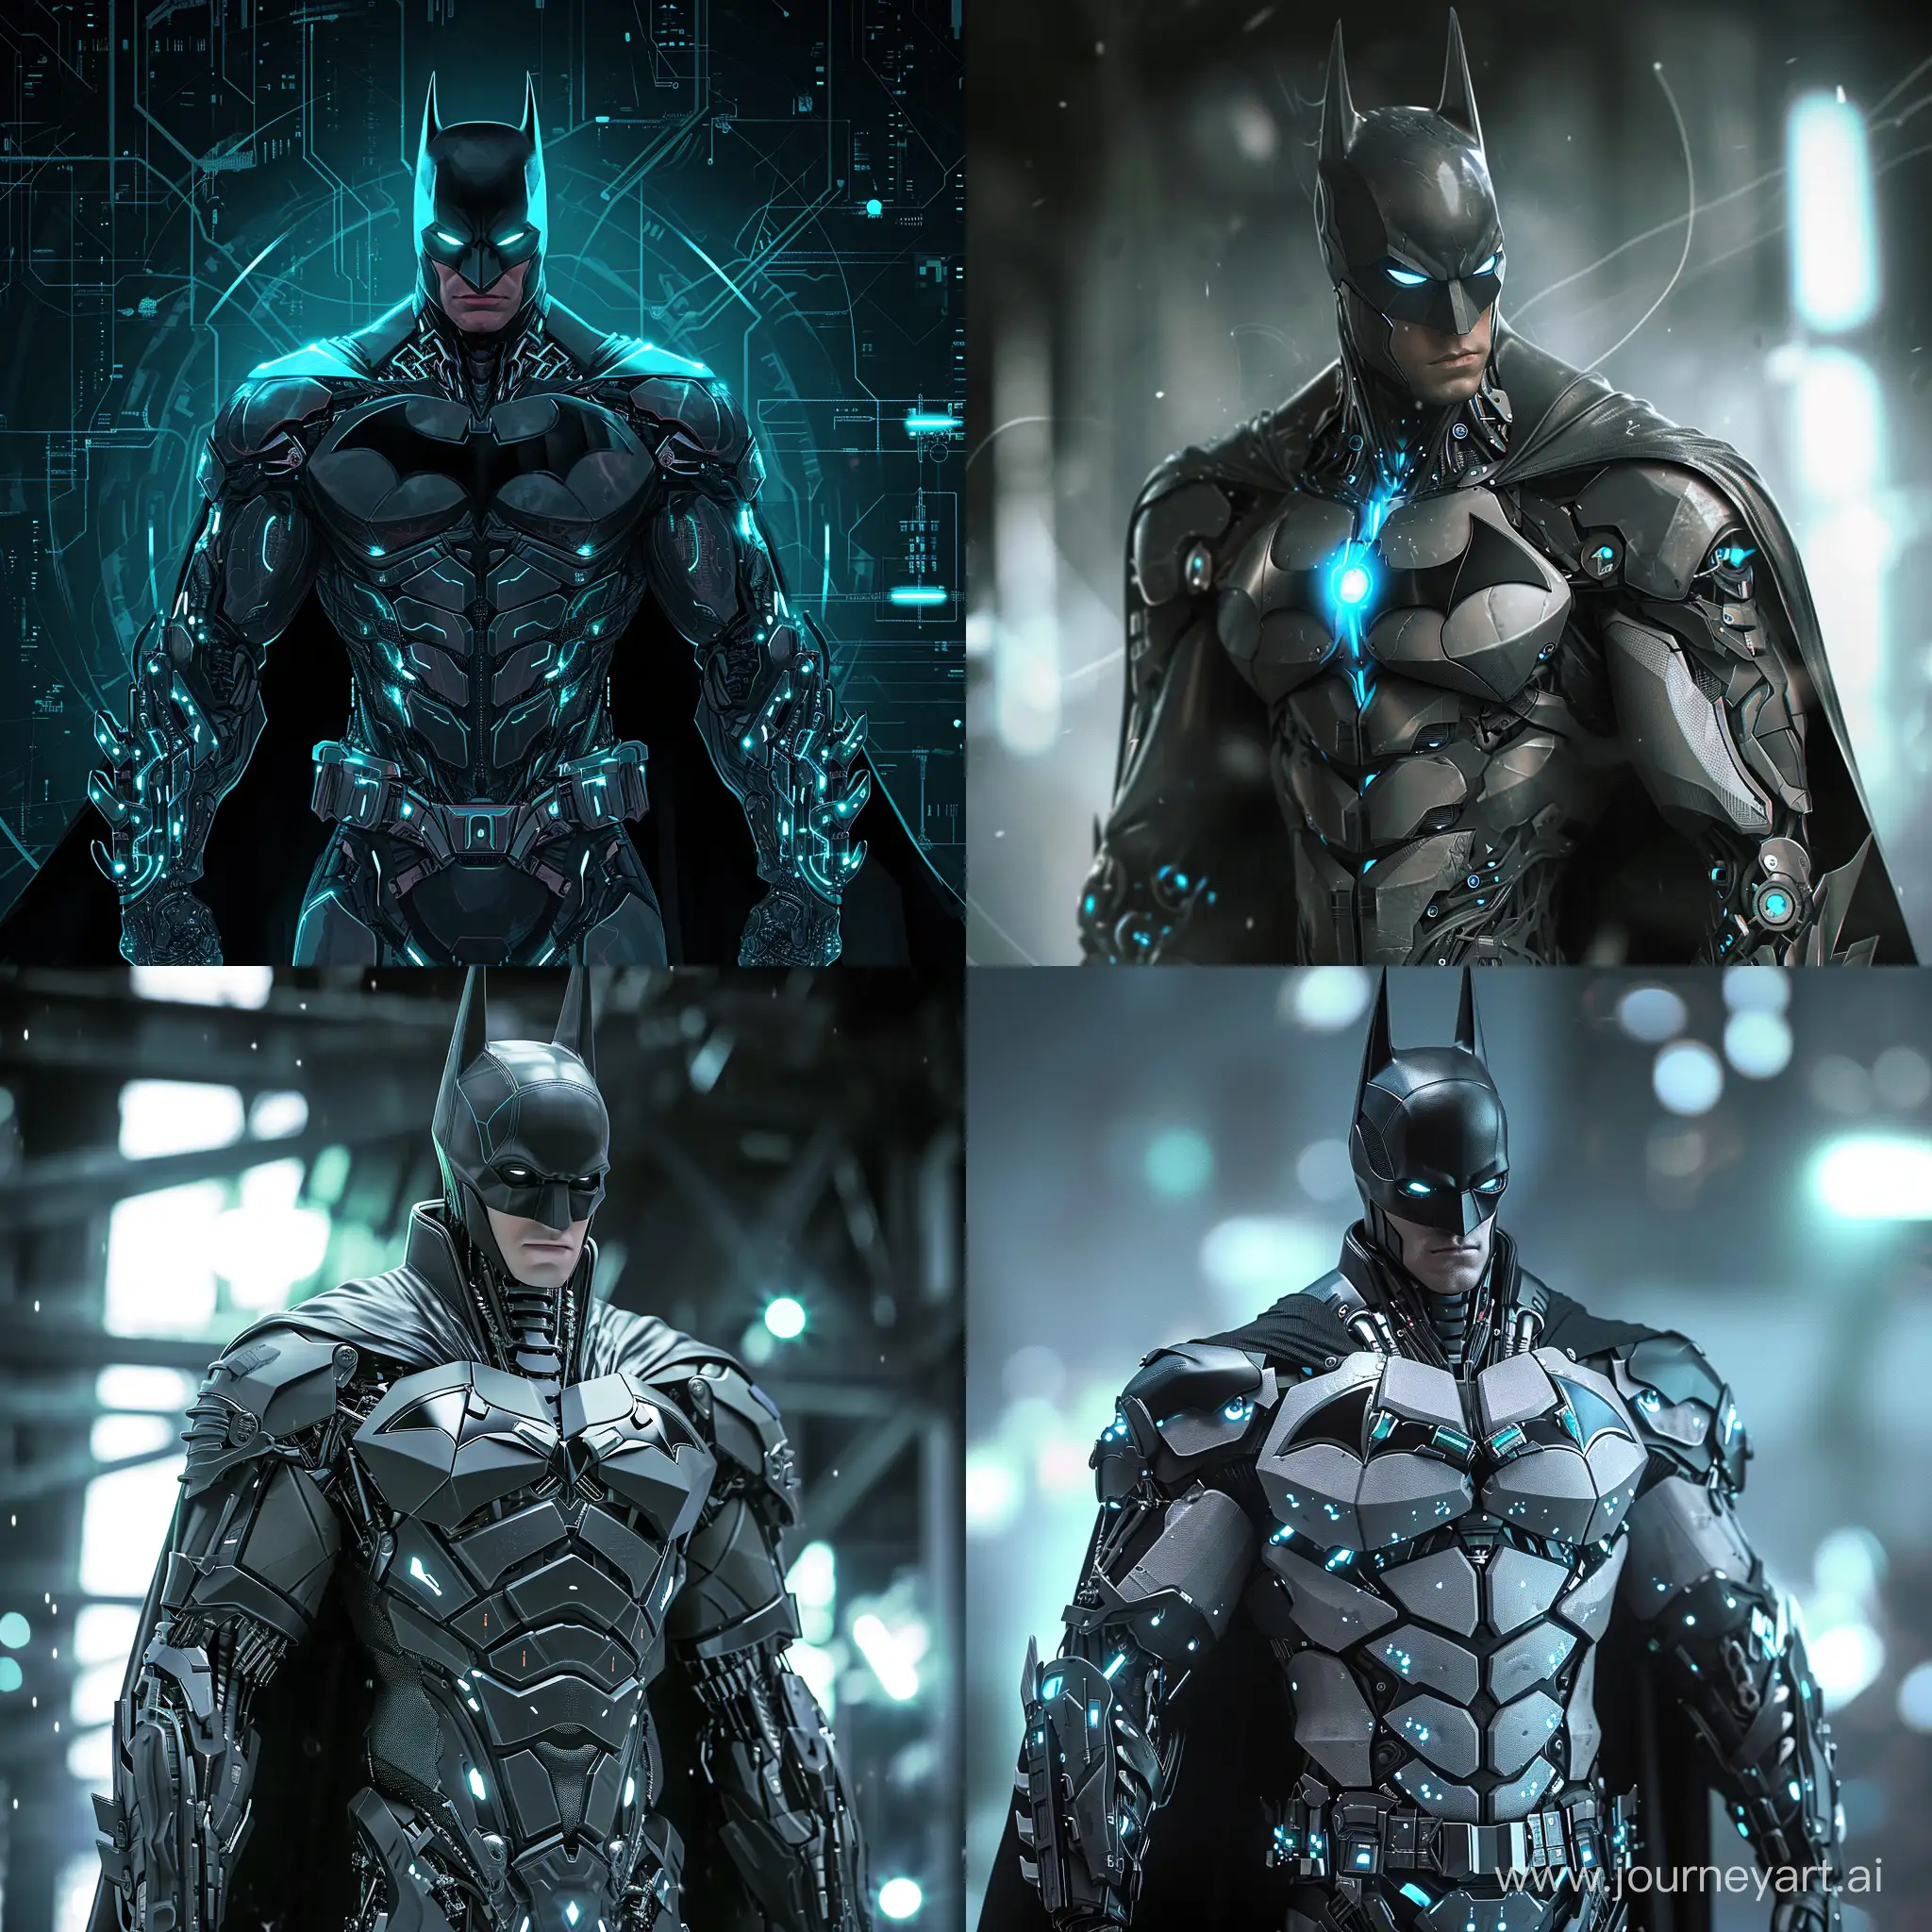 Futuristic-DC-Batman-with-Advanced-Nanotechnology